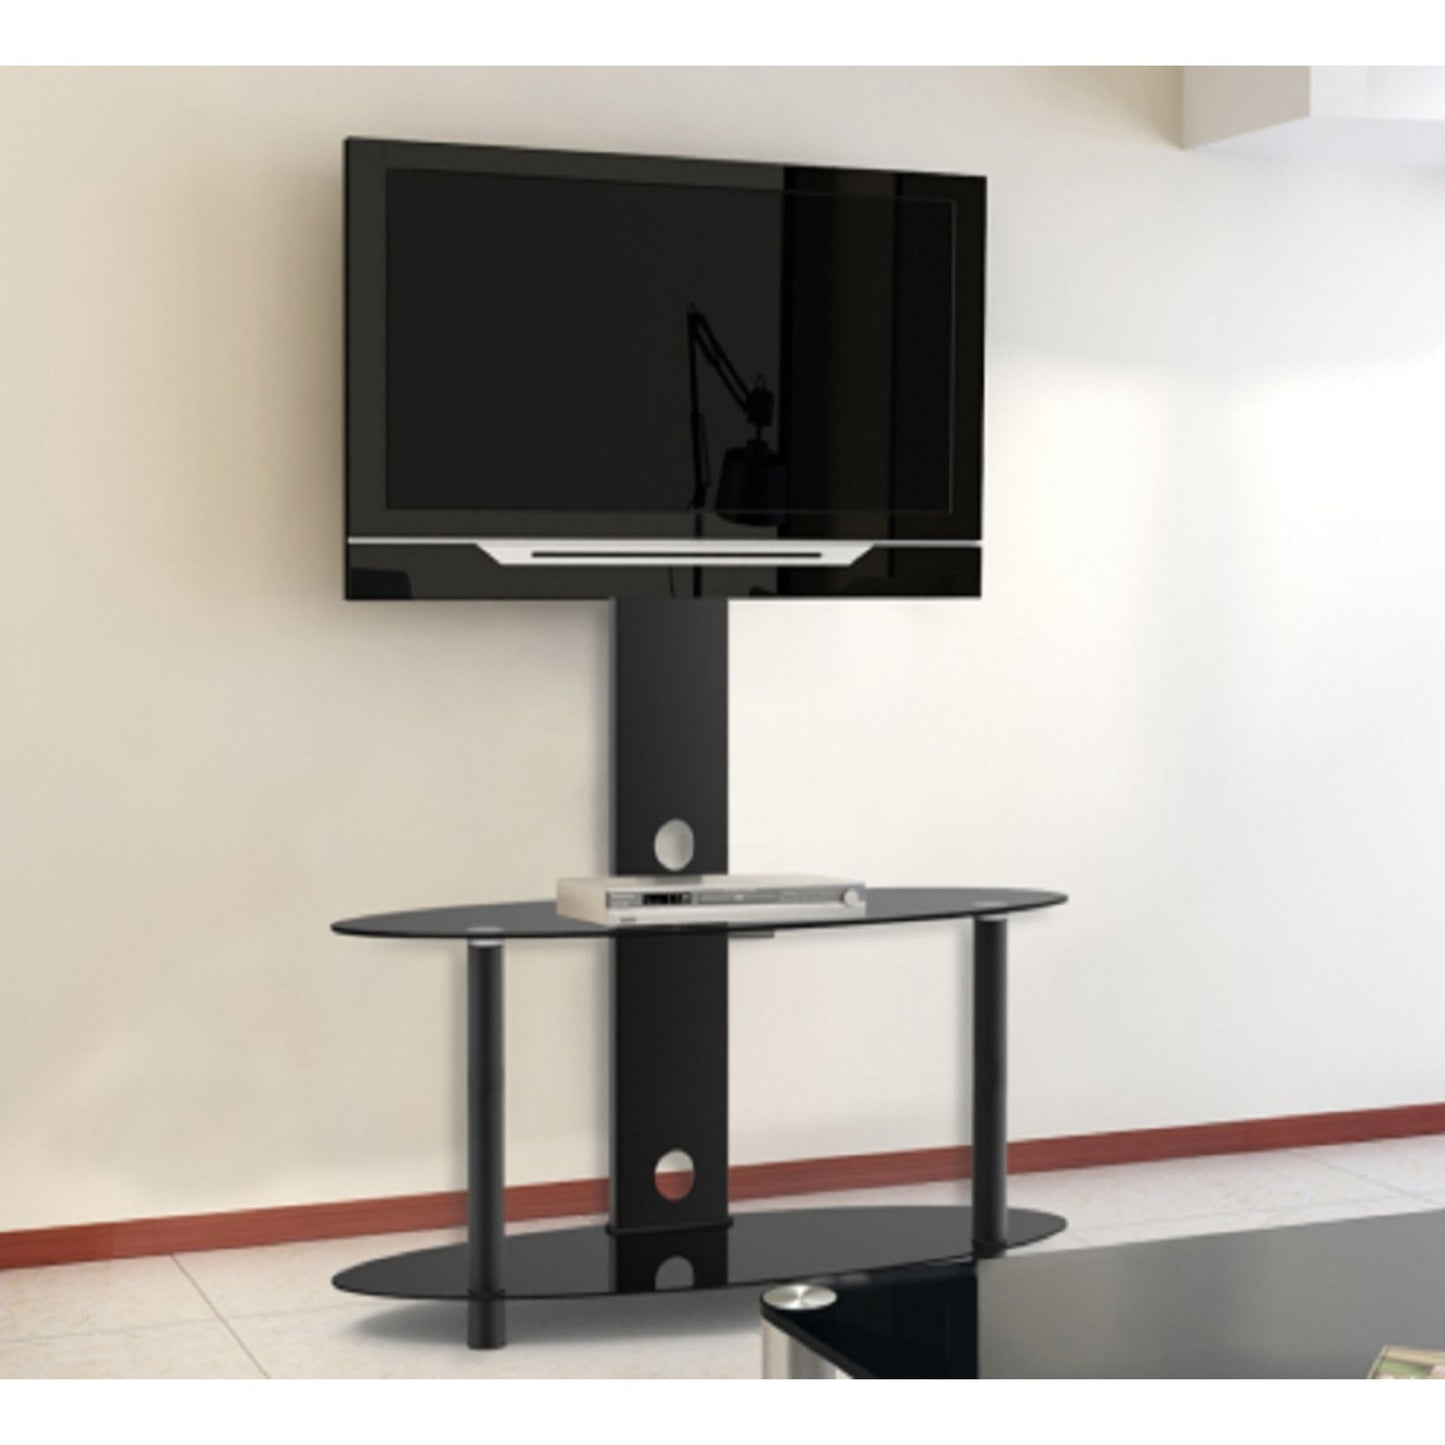 Skill Tech 2-Tier Oval Black Glass Media Console With Swivel Tv Mount Bracket For 32"-55" Screen, SH 324 FS